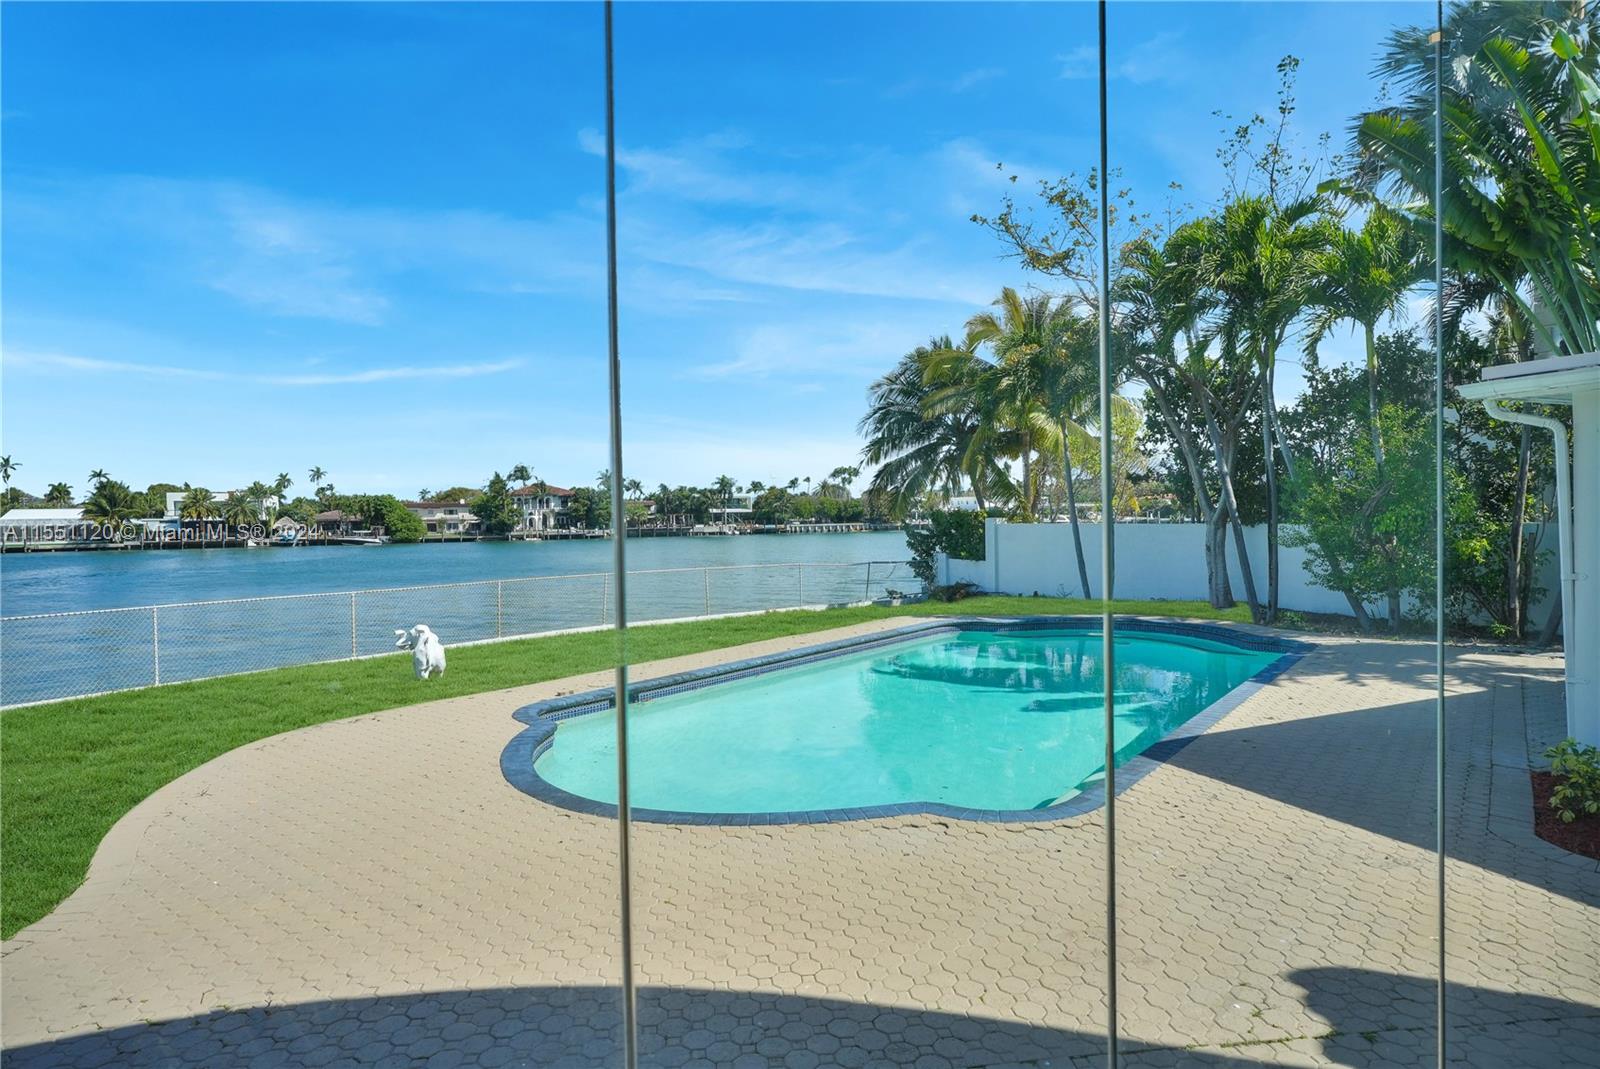 Rental Property at 721 W 47 St, Miami Beach, Miami-Dade County, Florida - Bedrooms: 4 
Bathrooms: 4  - $17,900 MO.